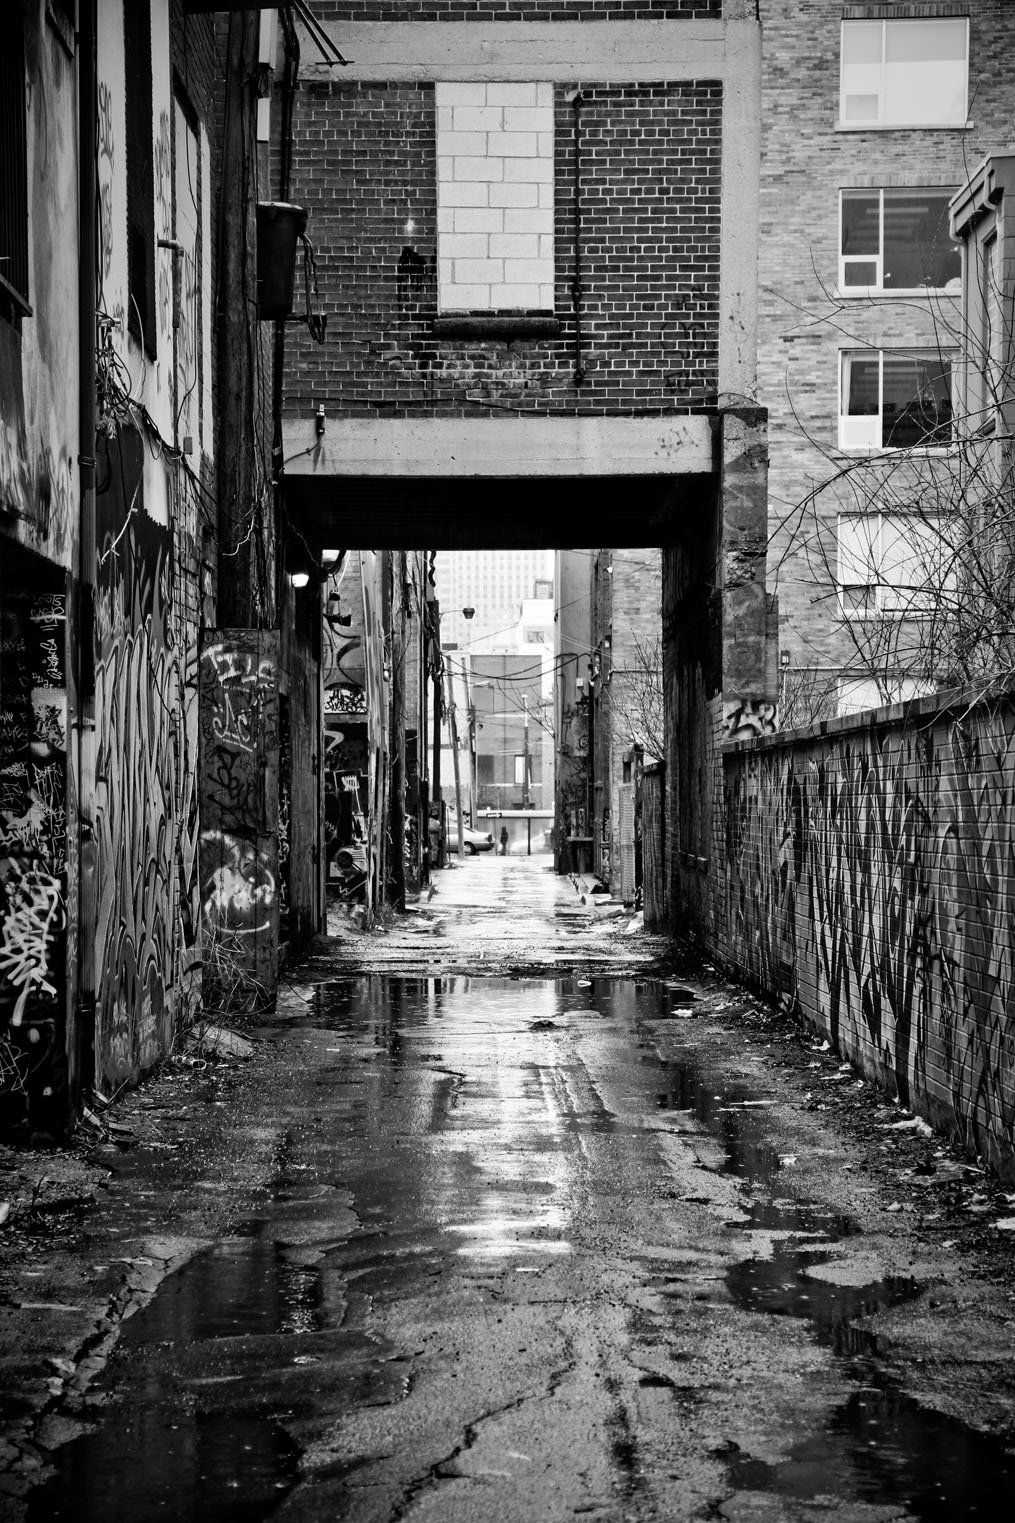 dark alley ghetto presence light rain new york downtown night light poor area crime violence black white rain window street garbage murder